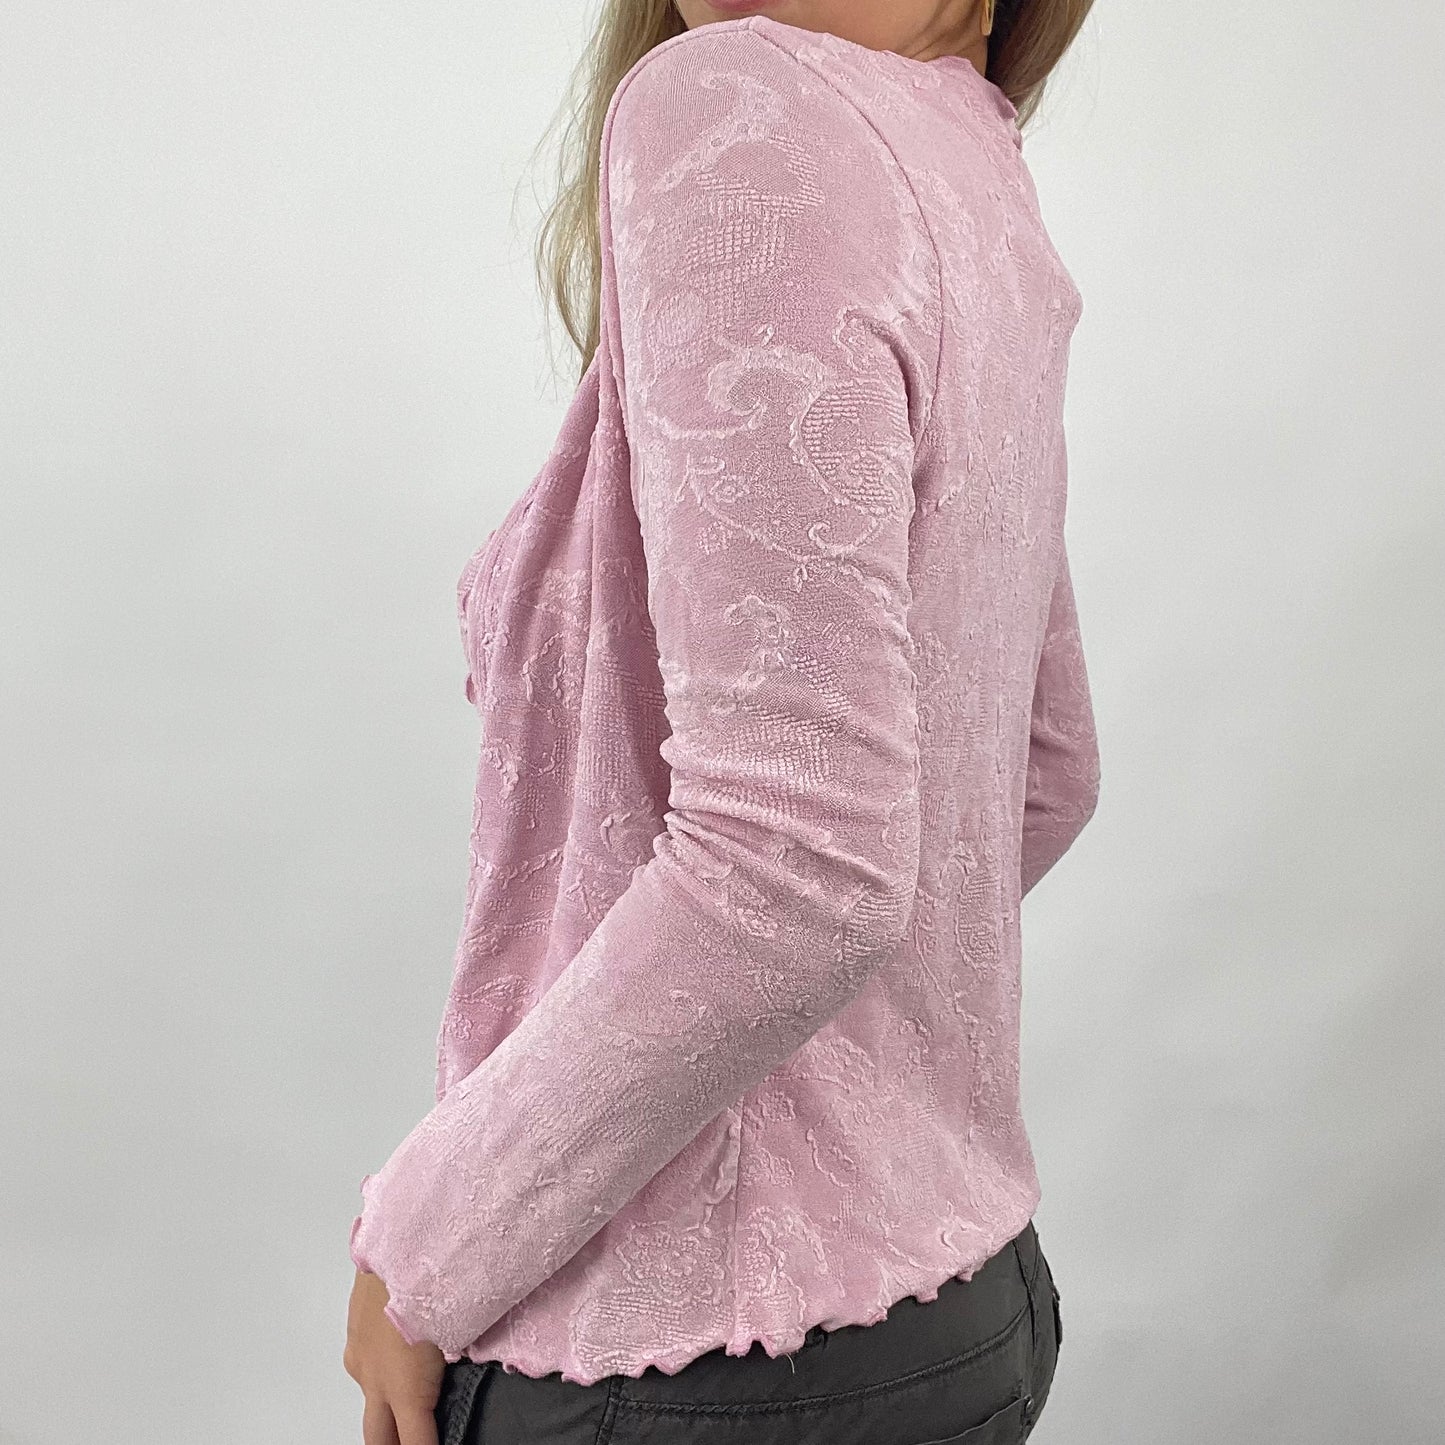 VINTAGE GEMS DROP | large pink embroidered top and cardigan set